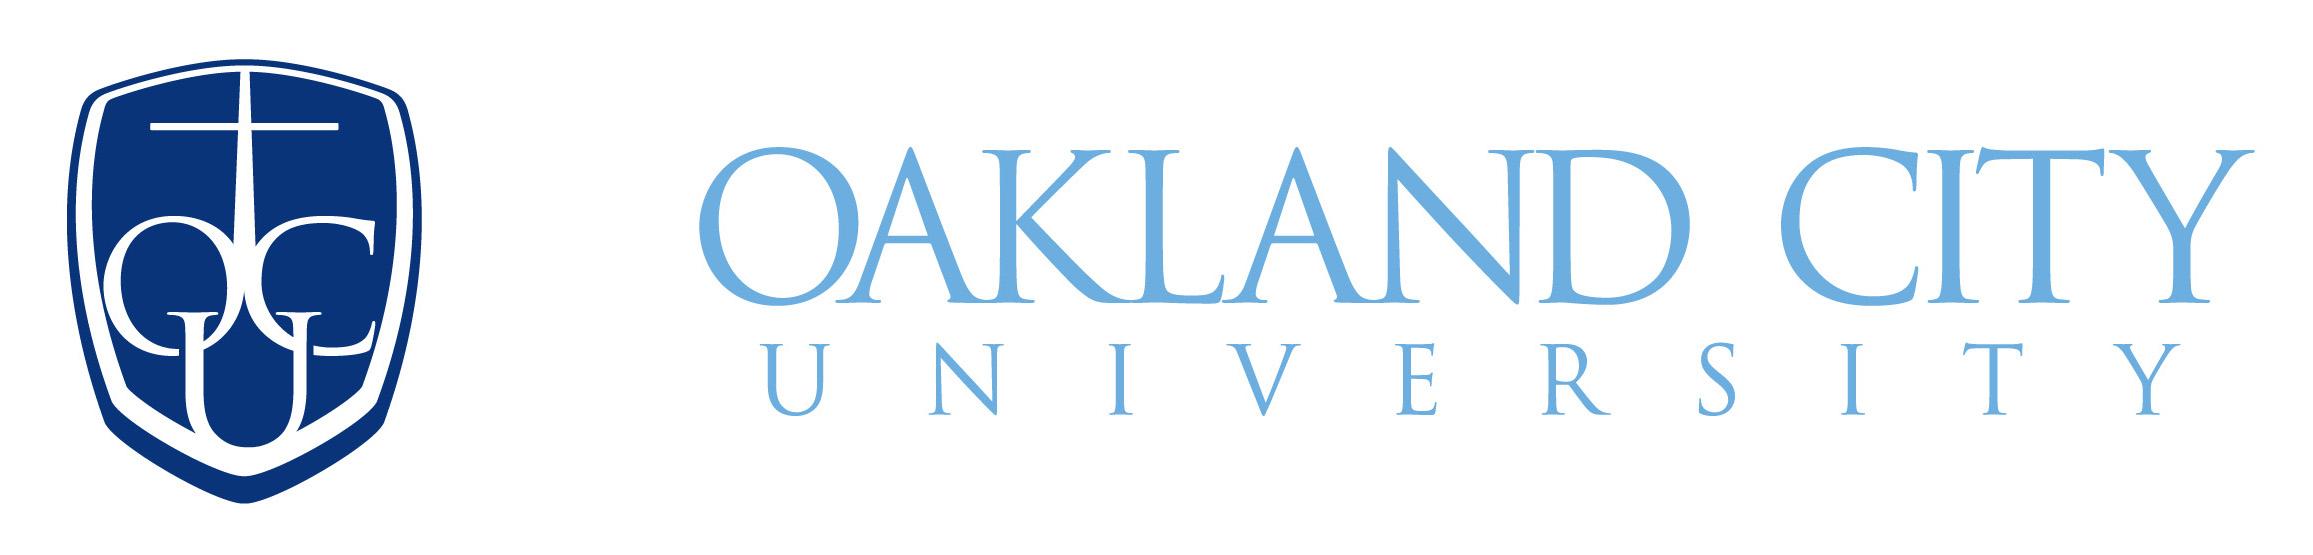 Ocu Logo - Oakland City University. CCNIT Mens Basketball Championship